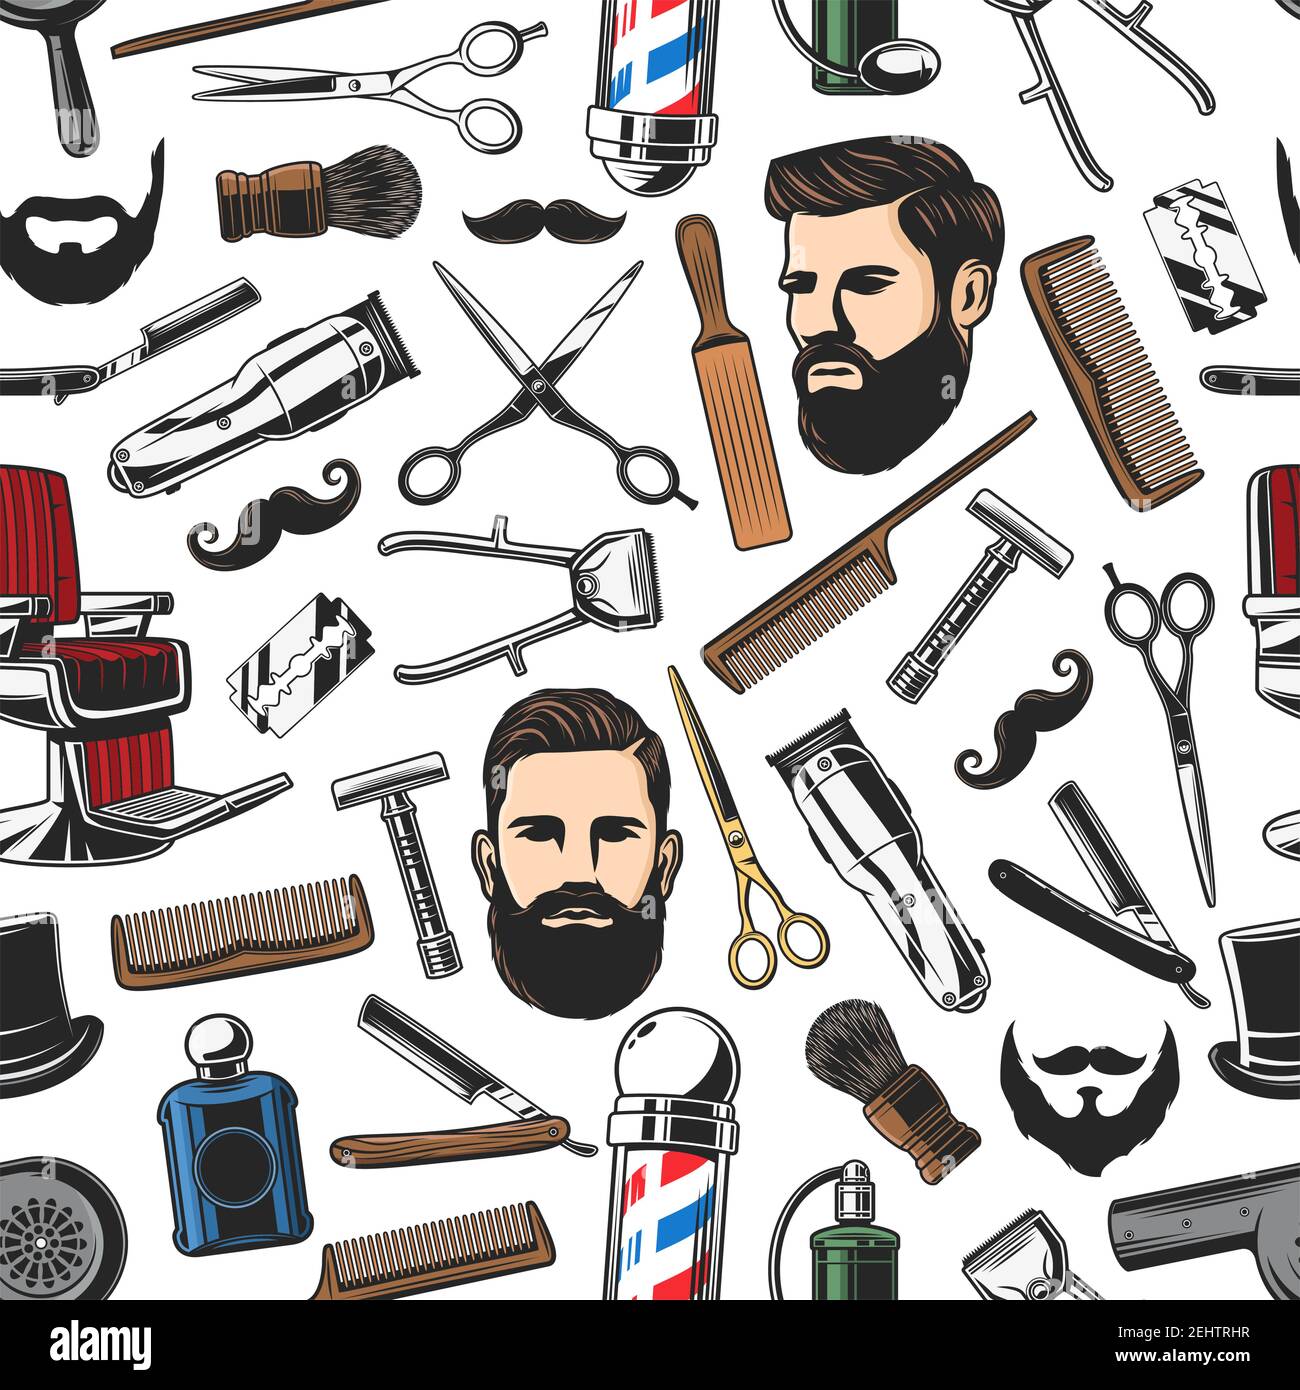 Page 12  Barbershop Items Images - Free Download on Freepik